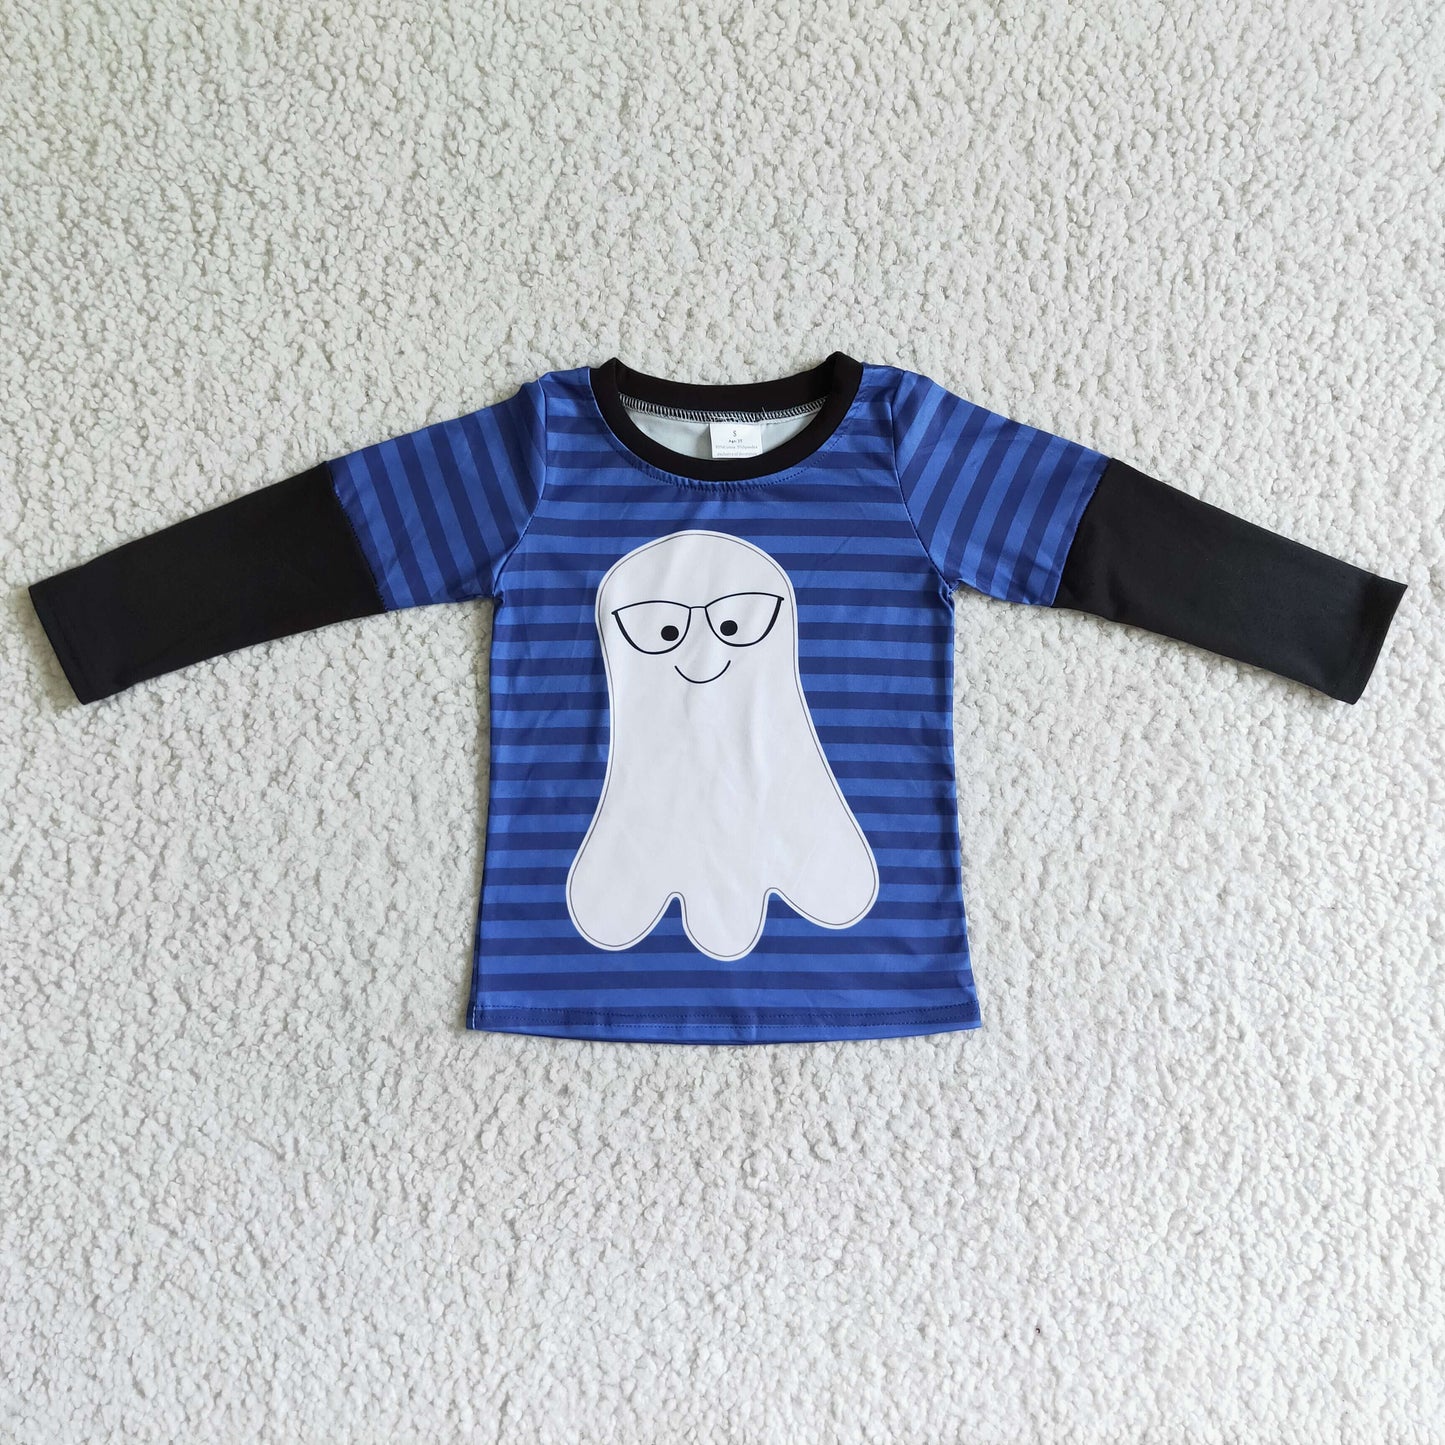 Ghost blue stripe top boy Halloween shirt